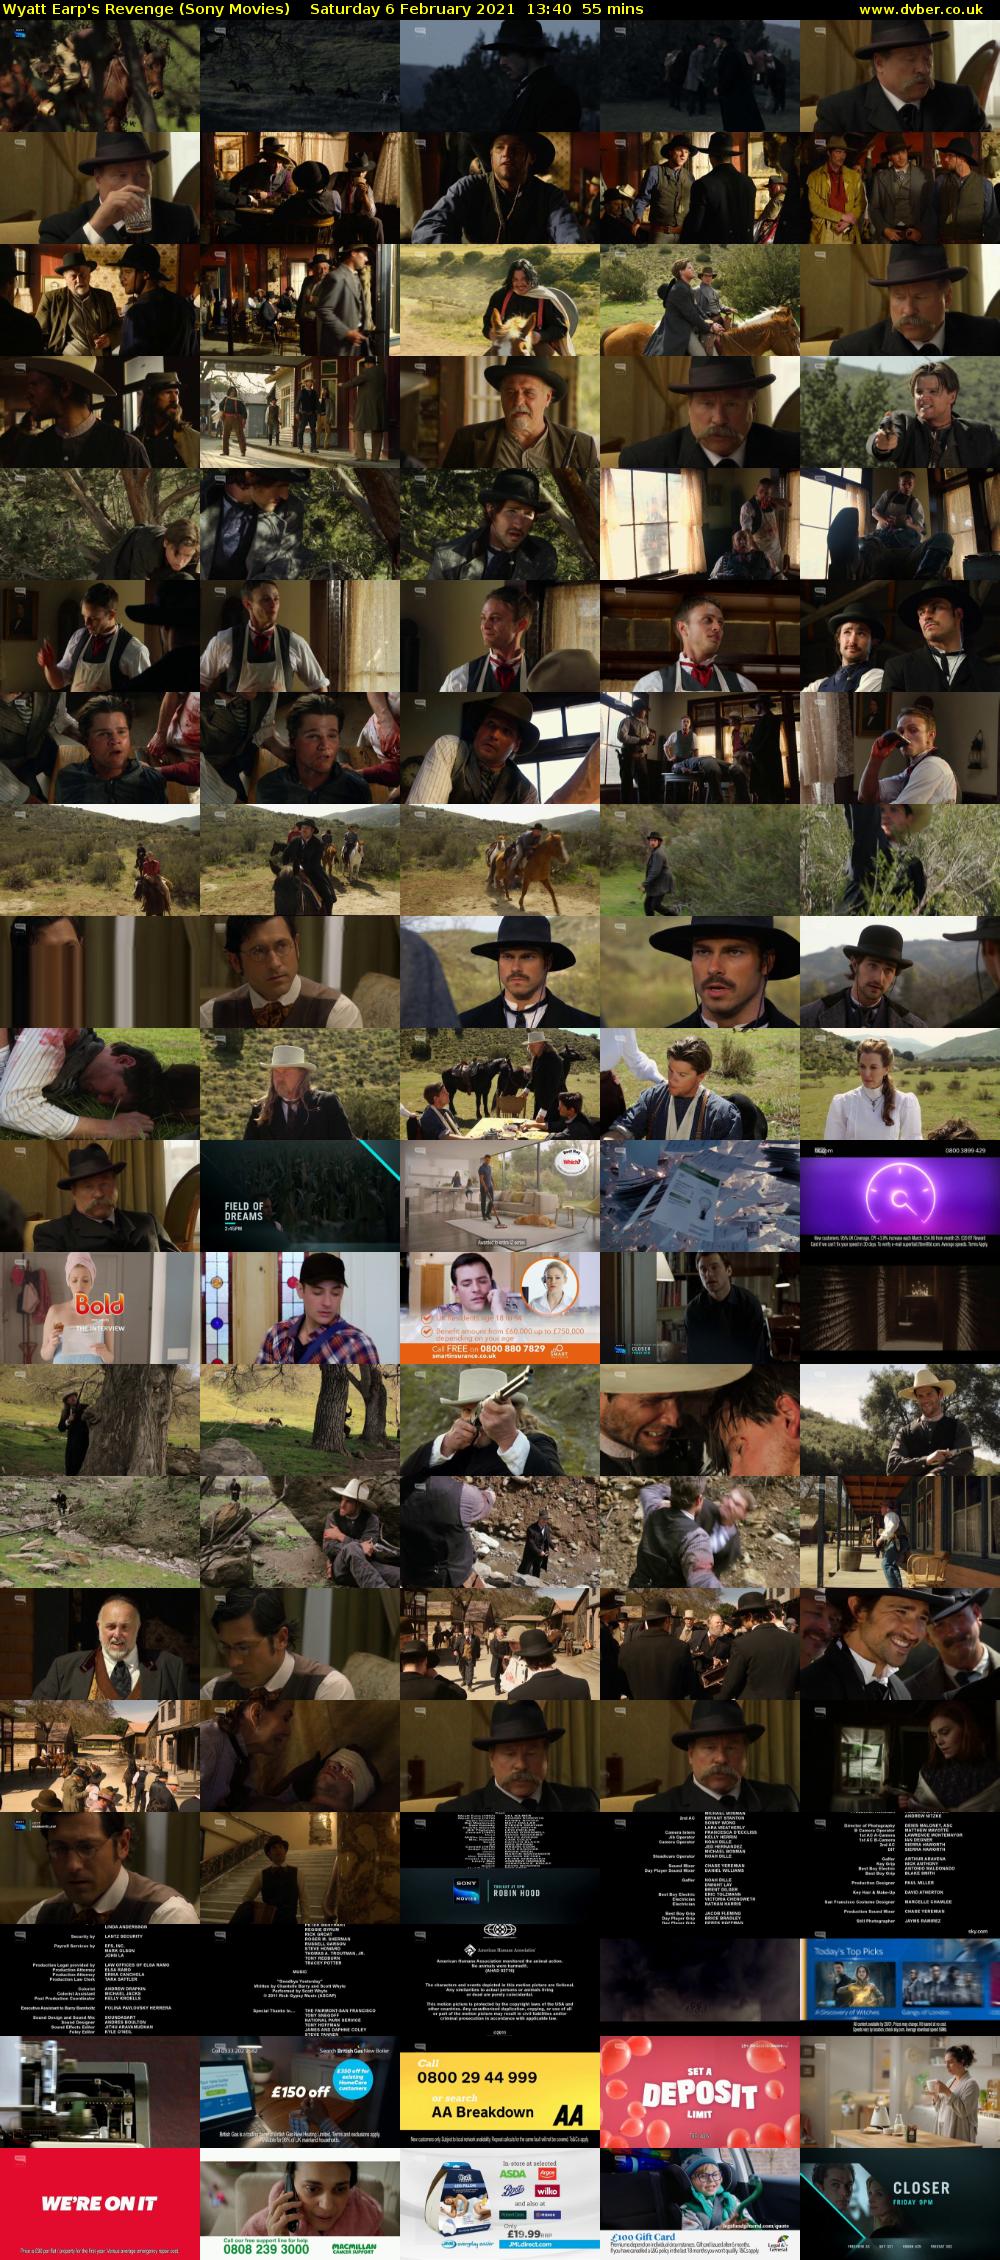 Wyatt Earp's Revenge (Sony Movies) Saturday 6 February 2021 13:40 - 14:35